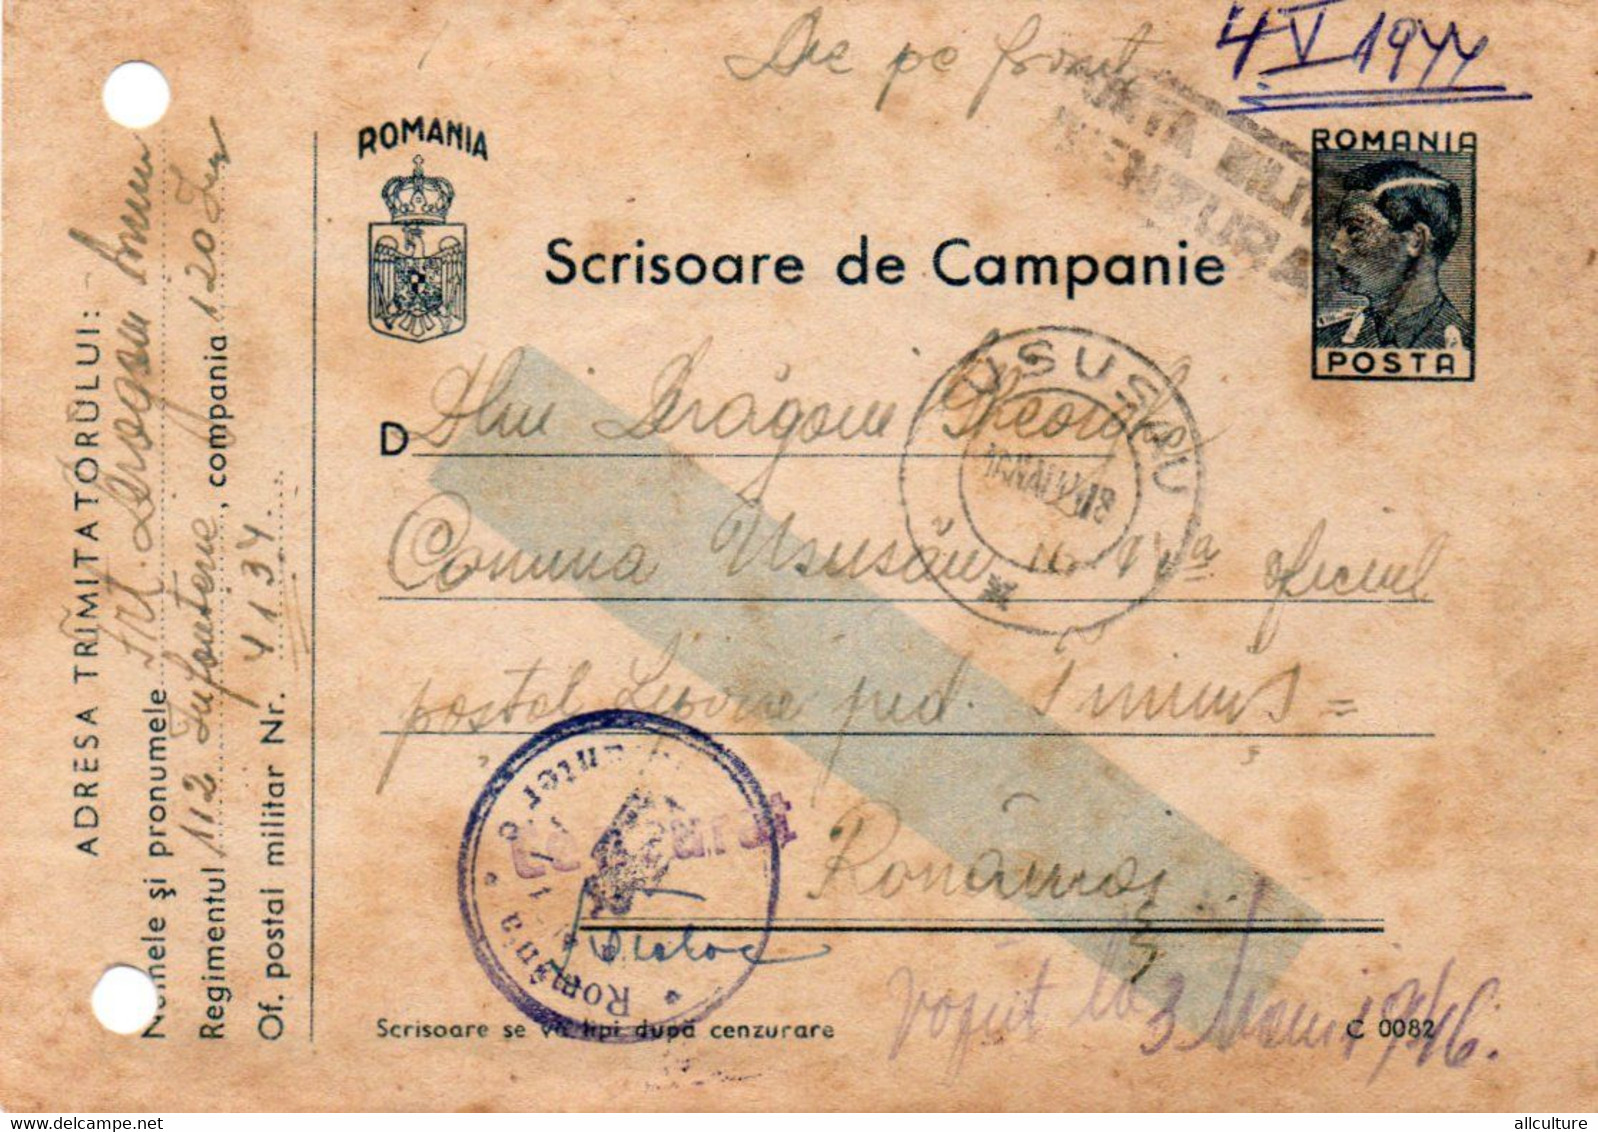 A52,A53 - 2 SCRISOARI DE CAMPANIE 2 LETTERS-SHEET IN BLUE ILUSTRATED  24.03. 1944,4 MAI 1944 WW2 STATIONERY ROMANIA USED - Storia Postale Seconda Guerra Mondiale